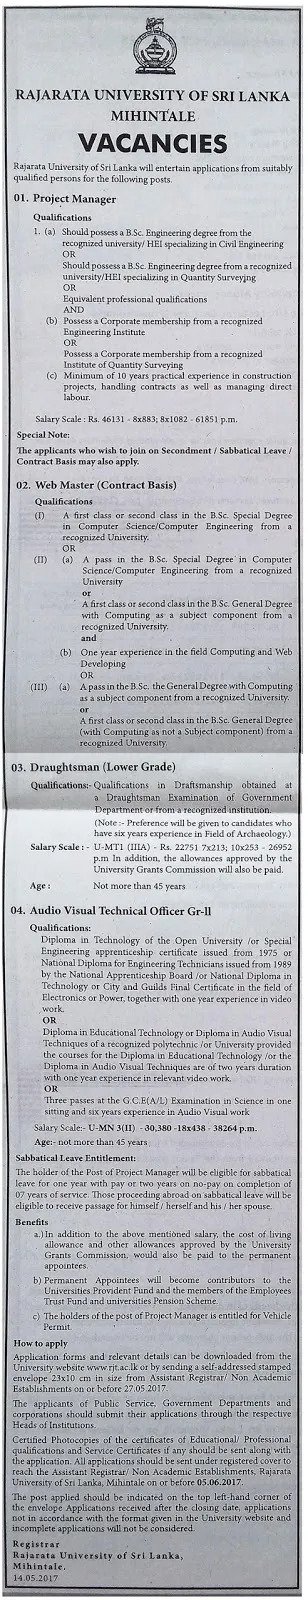 Non Academic Vacancies - Rajarata University Mihintale